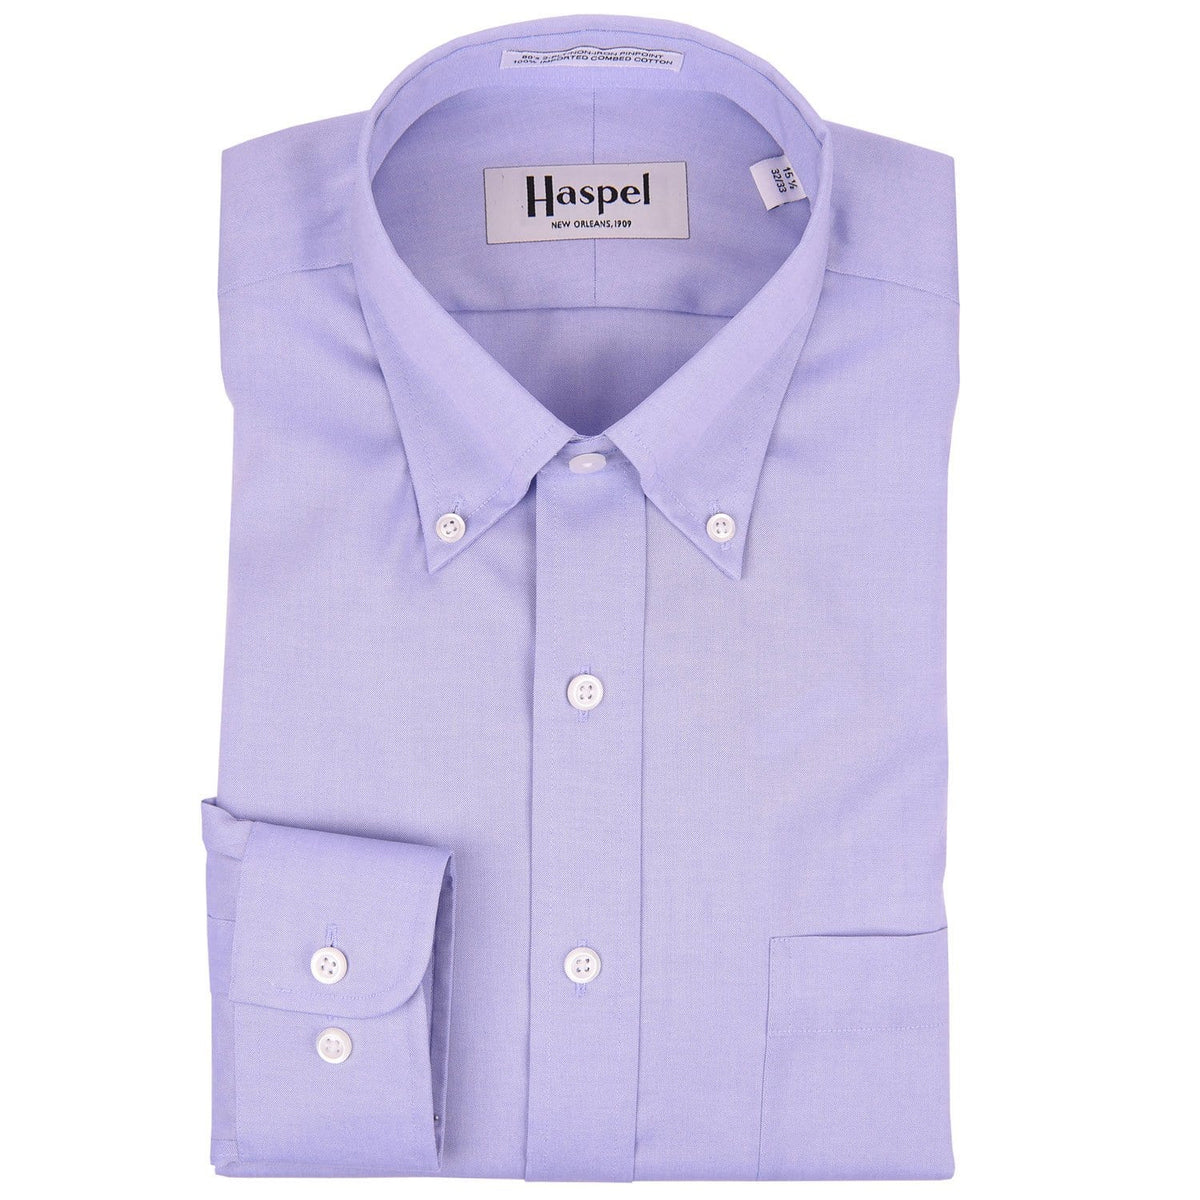 Howard Lt. Blue Button Down Oxford Dress Shirt - Haspel Clothing